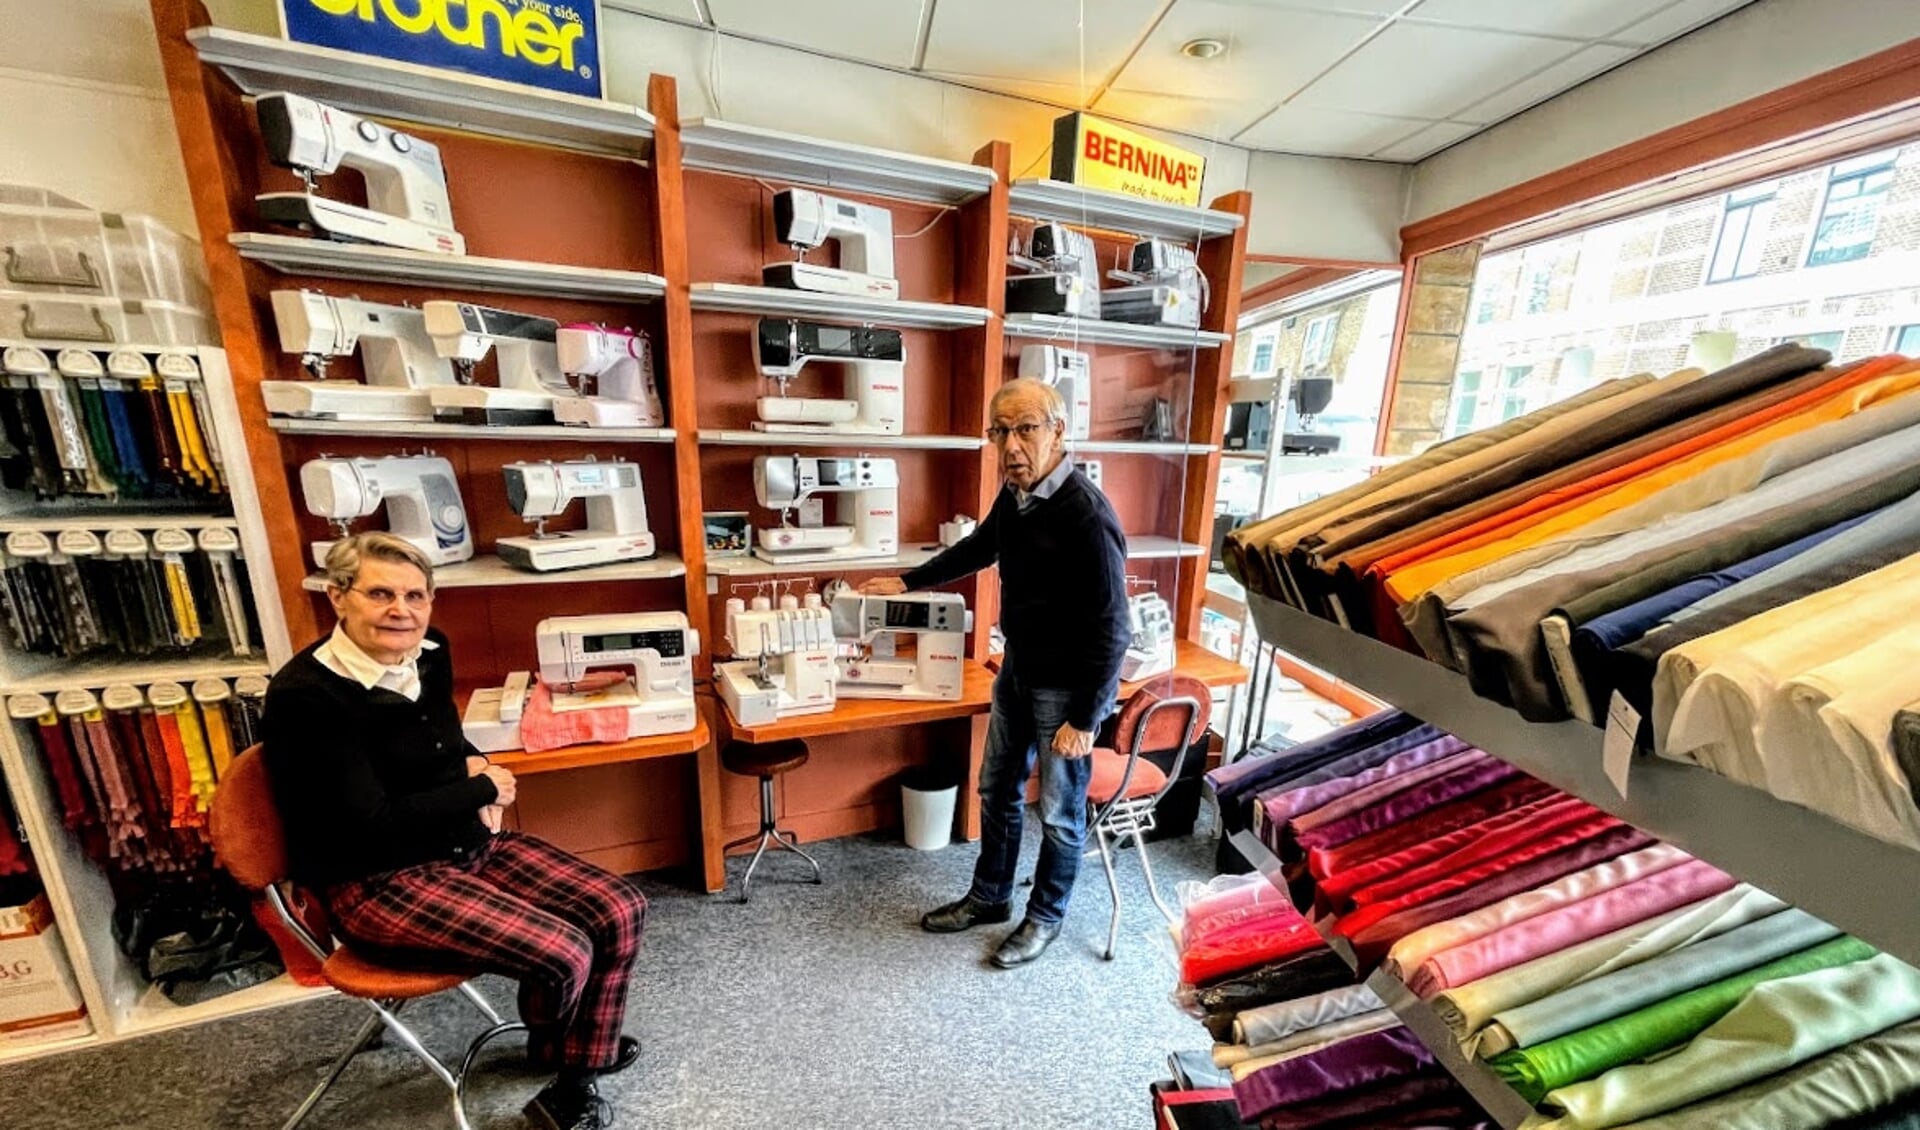 Magda en Martin Borgonjen in hun winkel die 50 jaar bestaat. Foto: Henri Bruntink